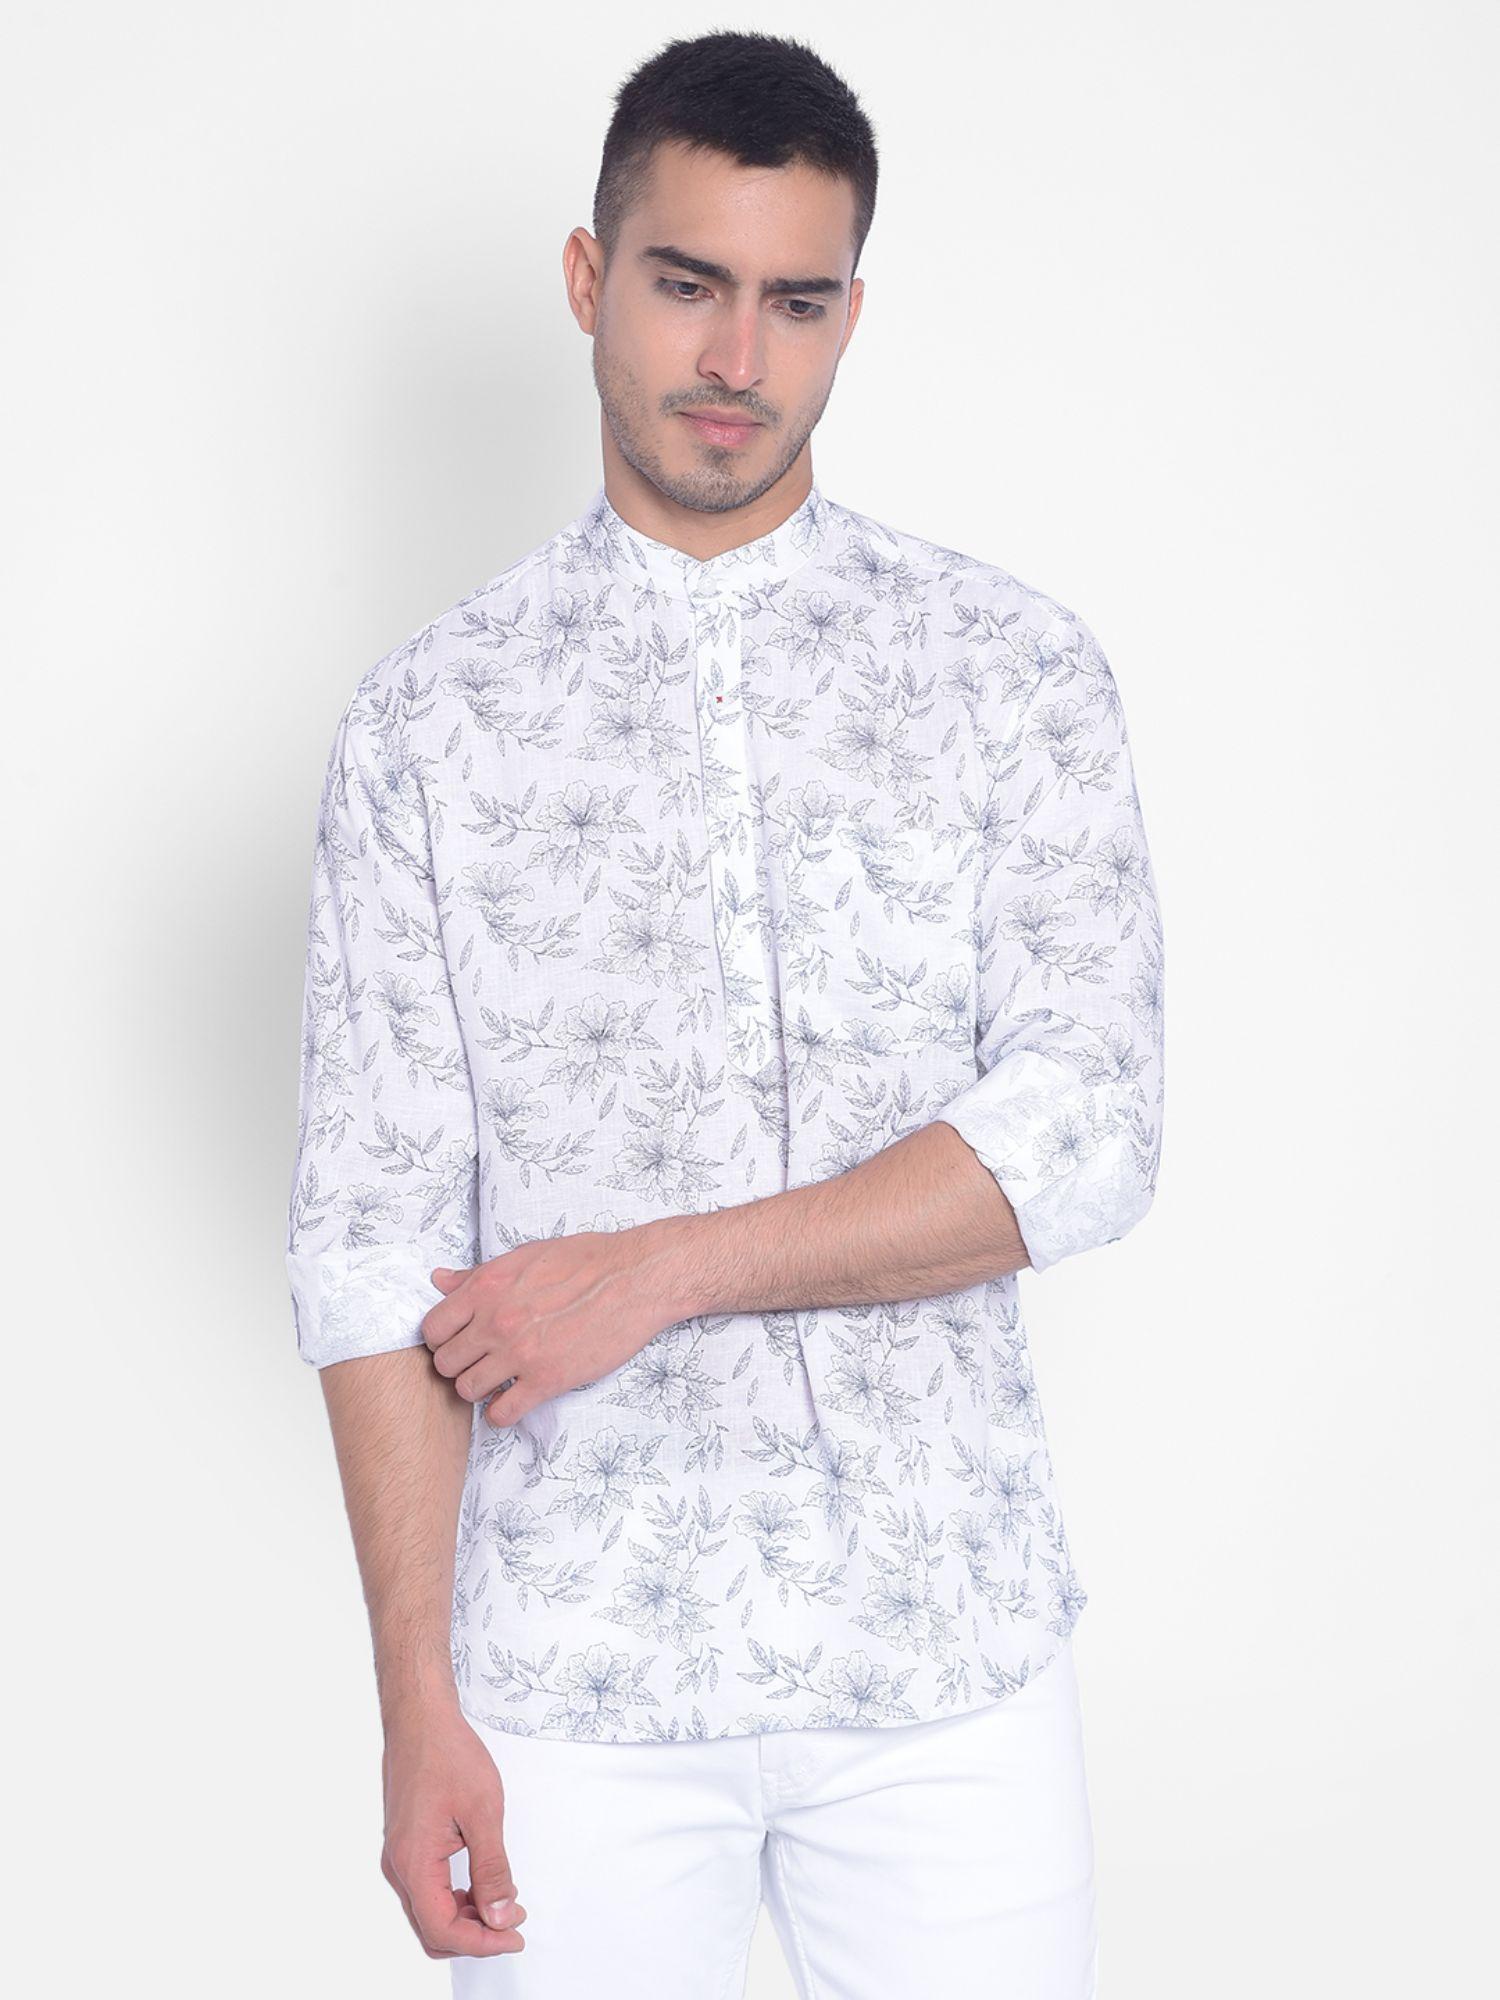 men's-white-floral-shirt